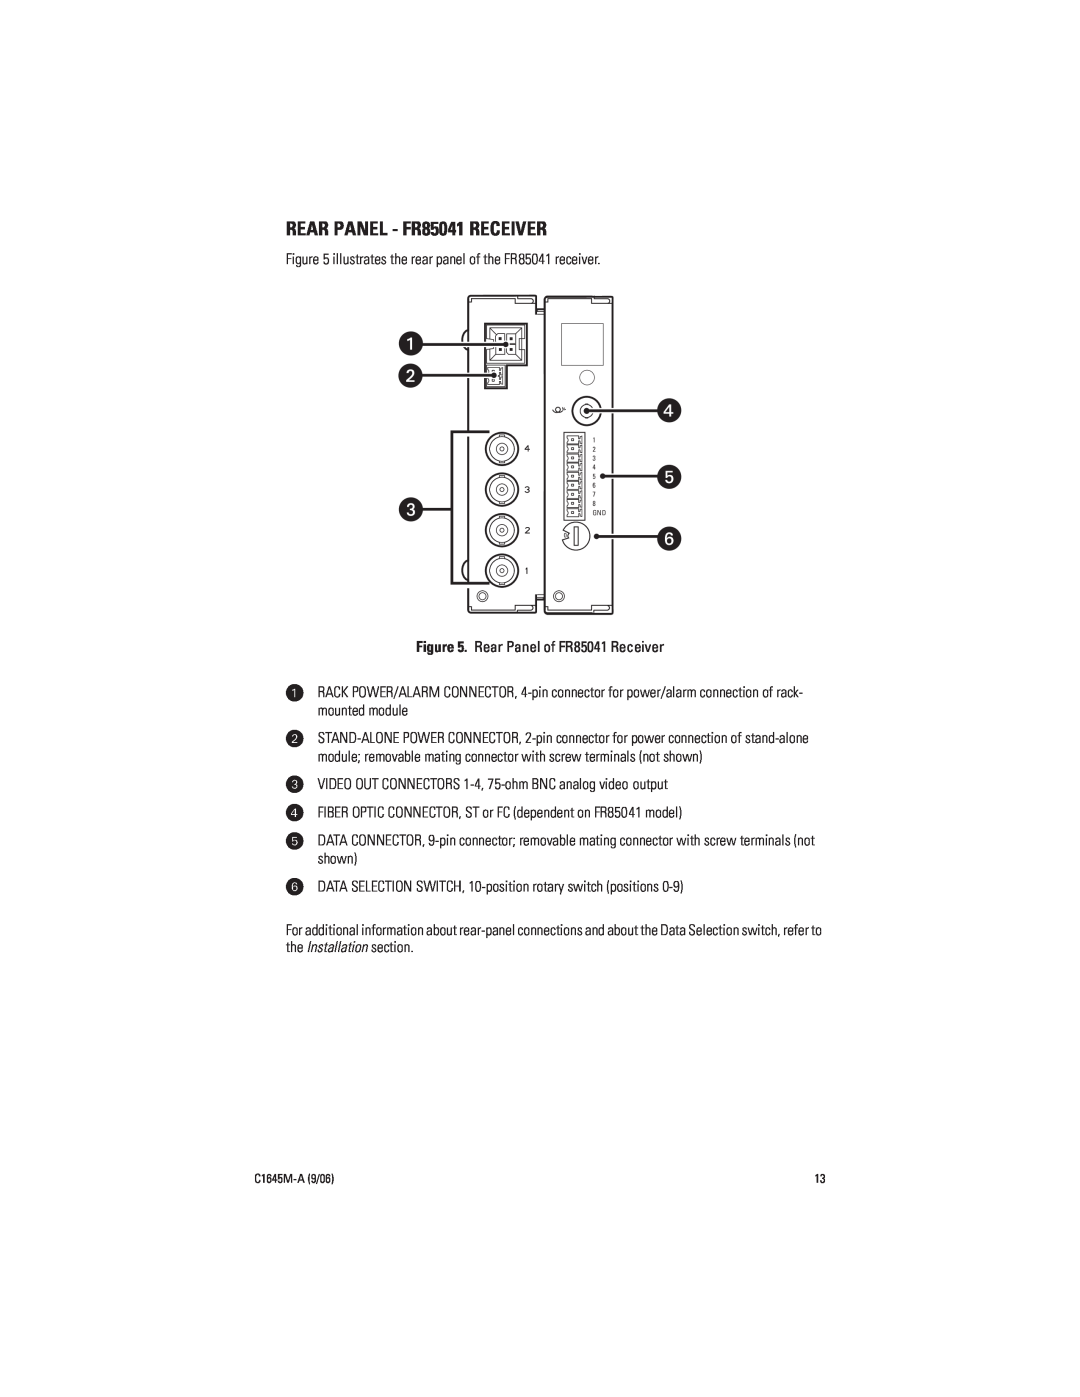 Pelco installation manual REAR PANEL - FR85041 RECEIVER 